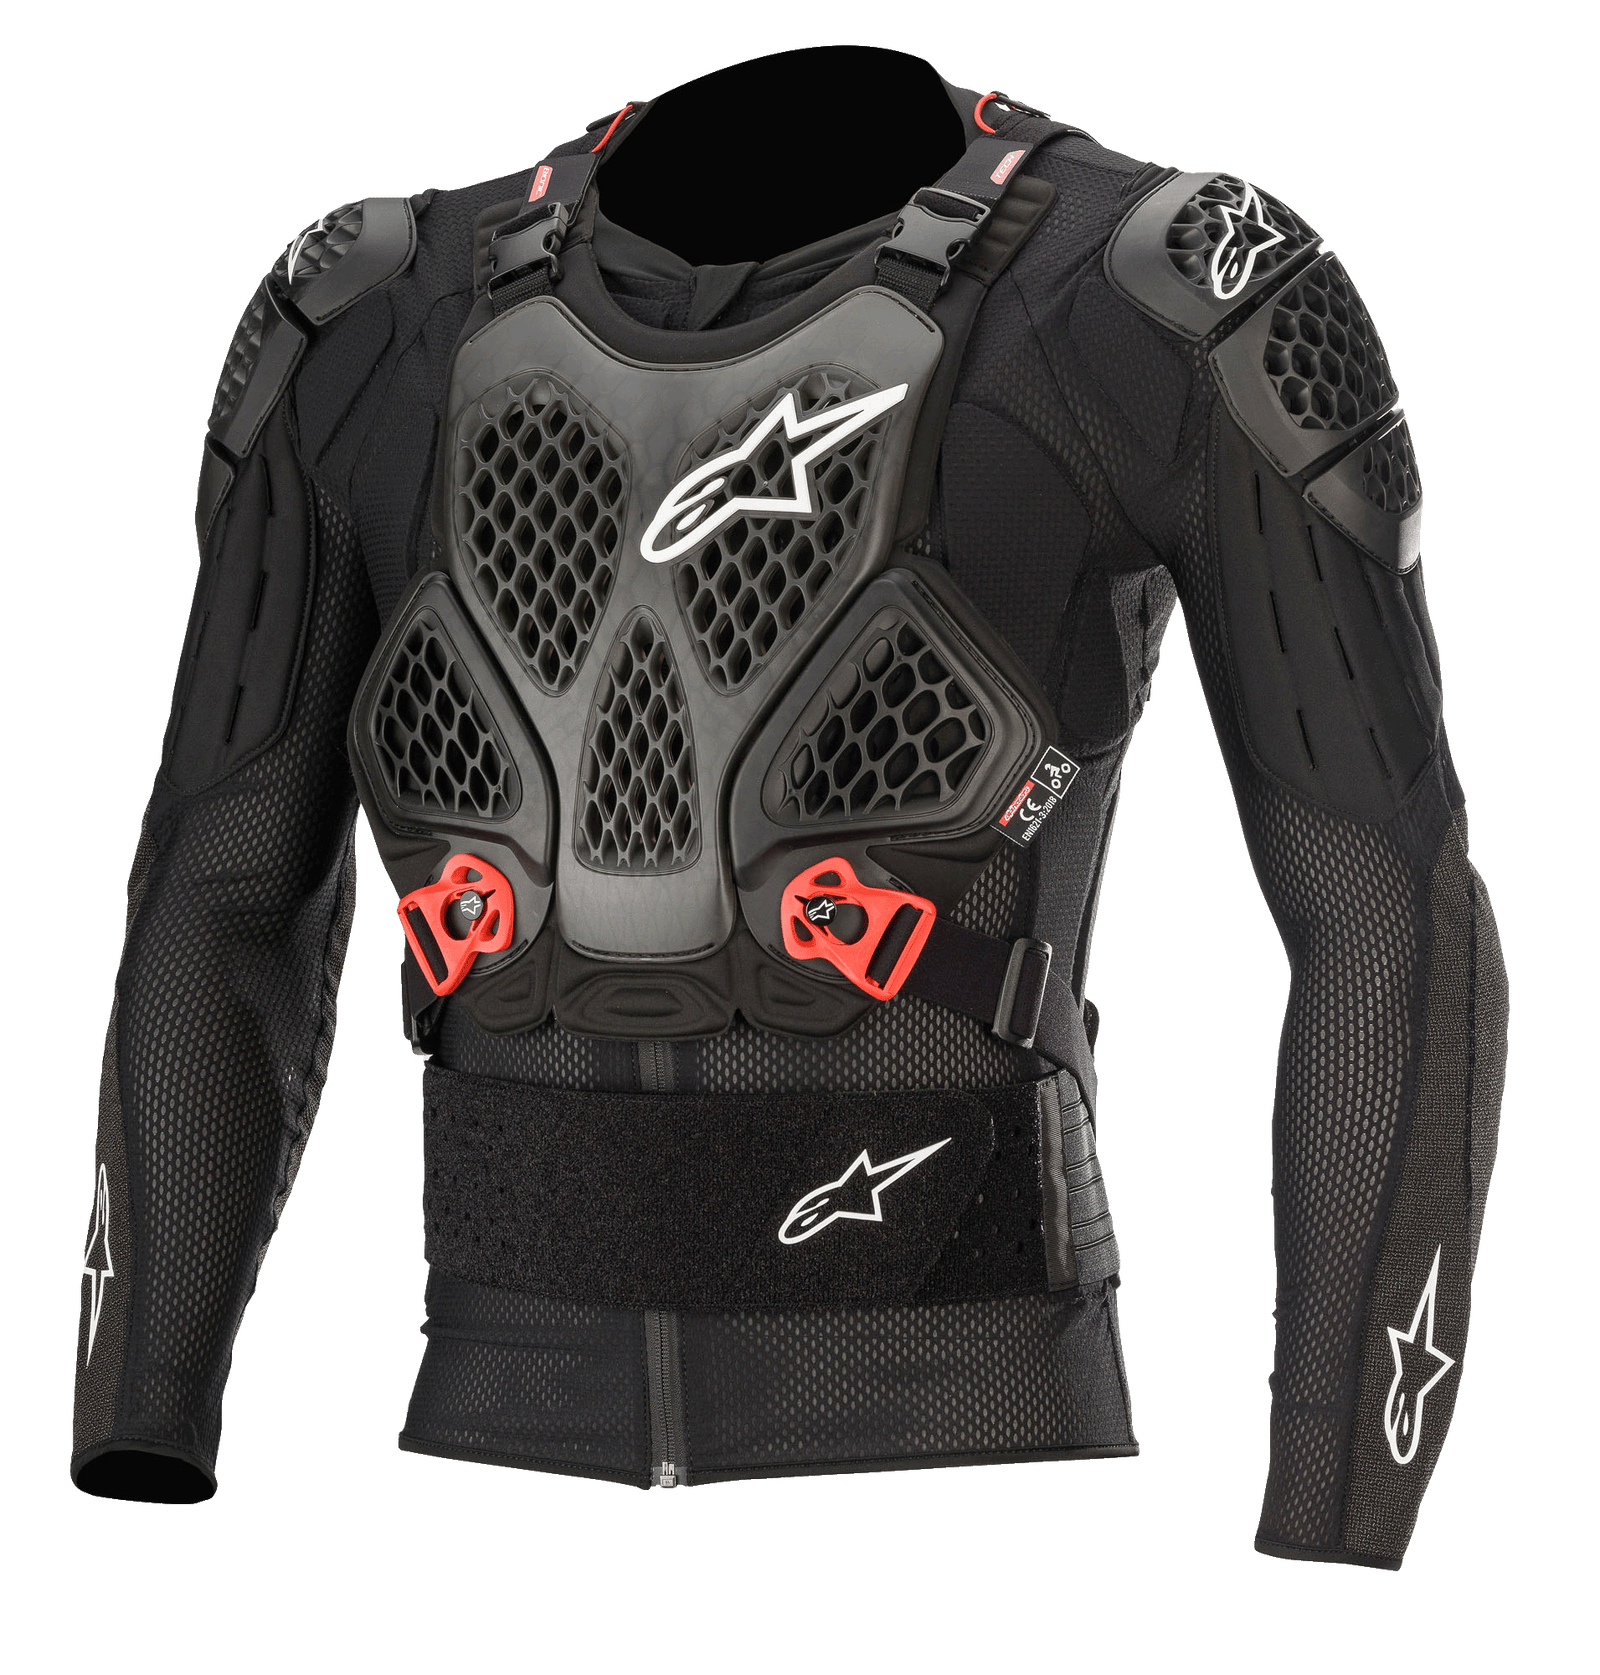 Bionic Tech V2 Protection Jacket